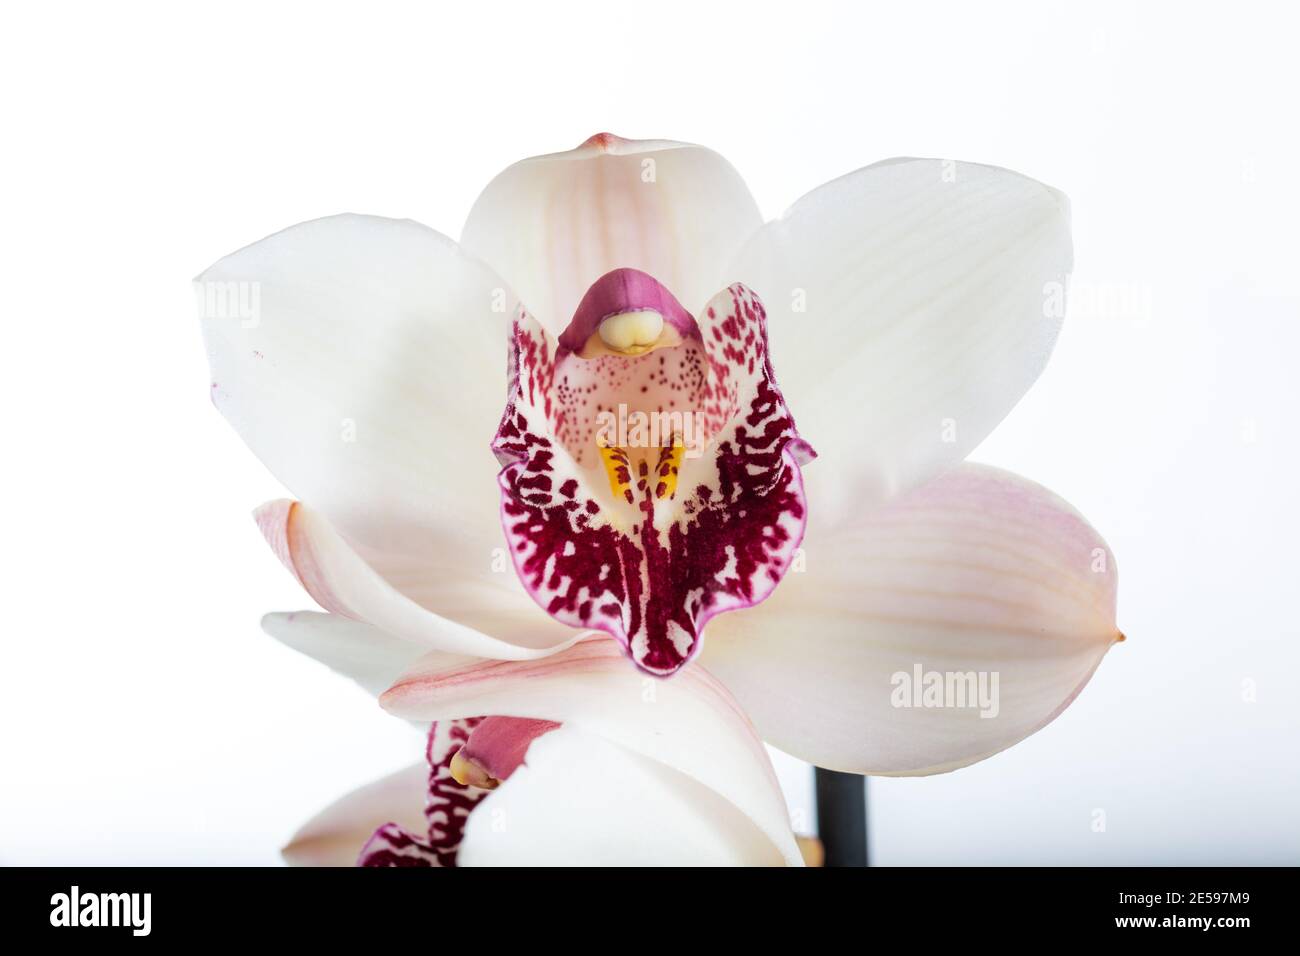 Boat orchid, Cymbidium (Orchidaceae) Stock Photo